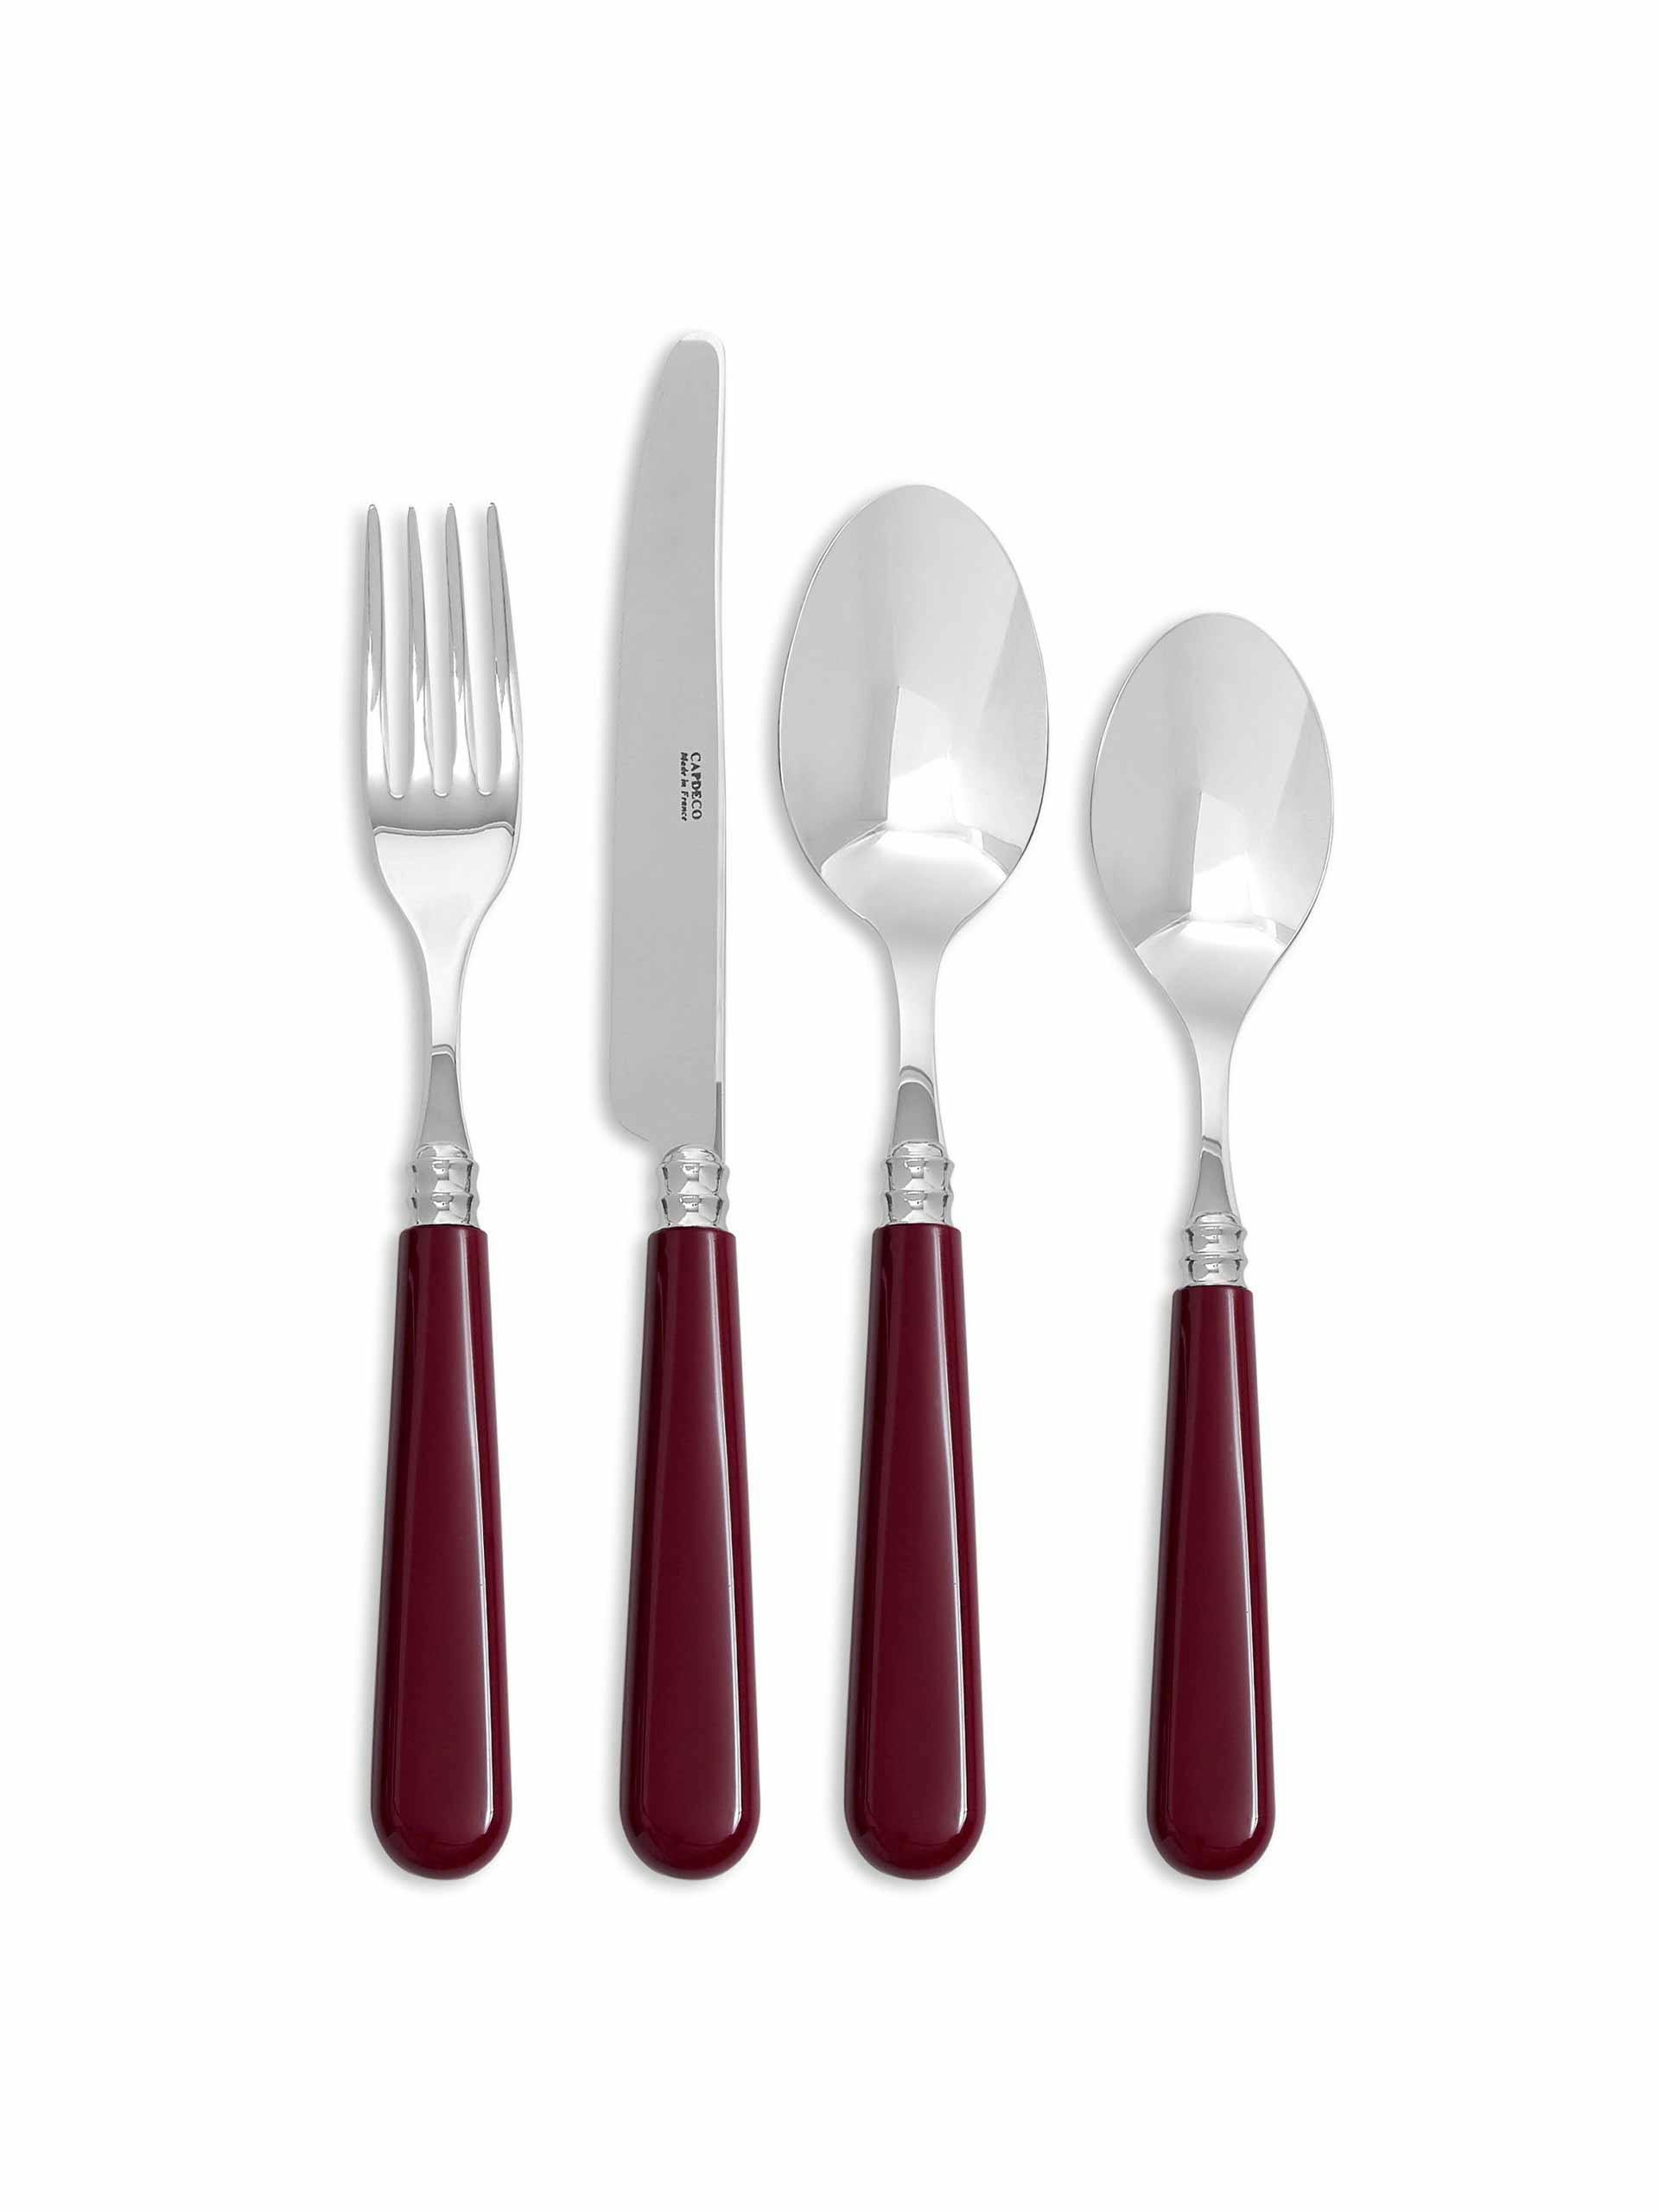 Burgundy cutlery set